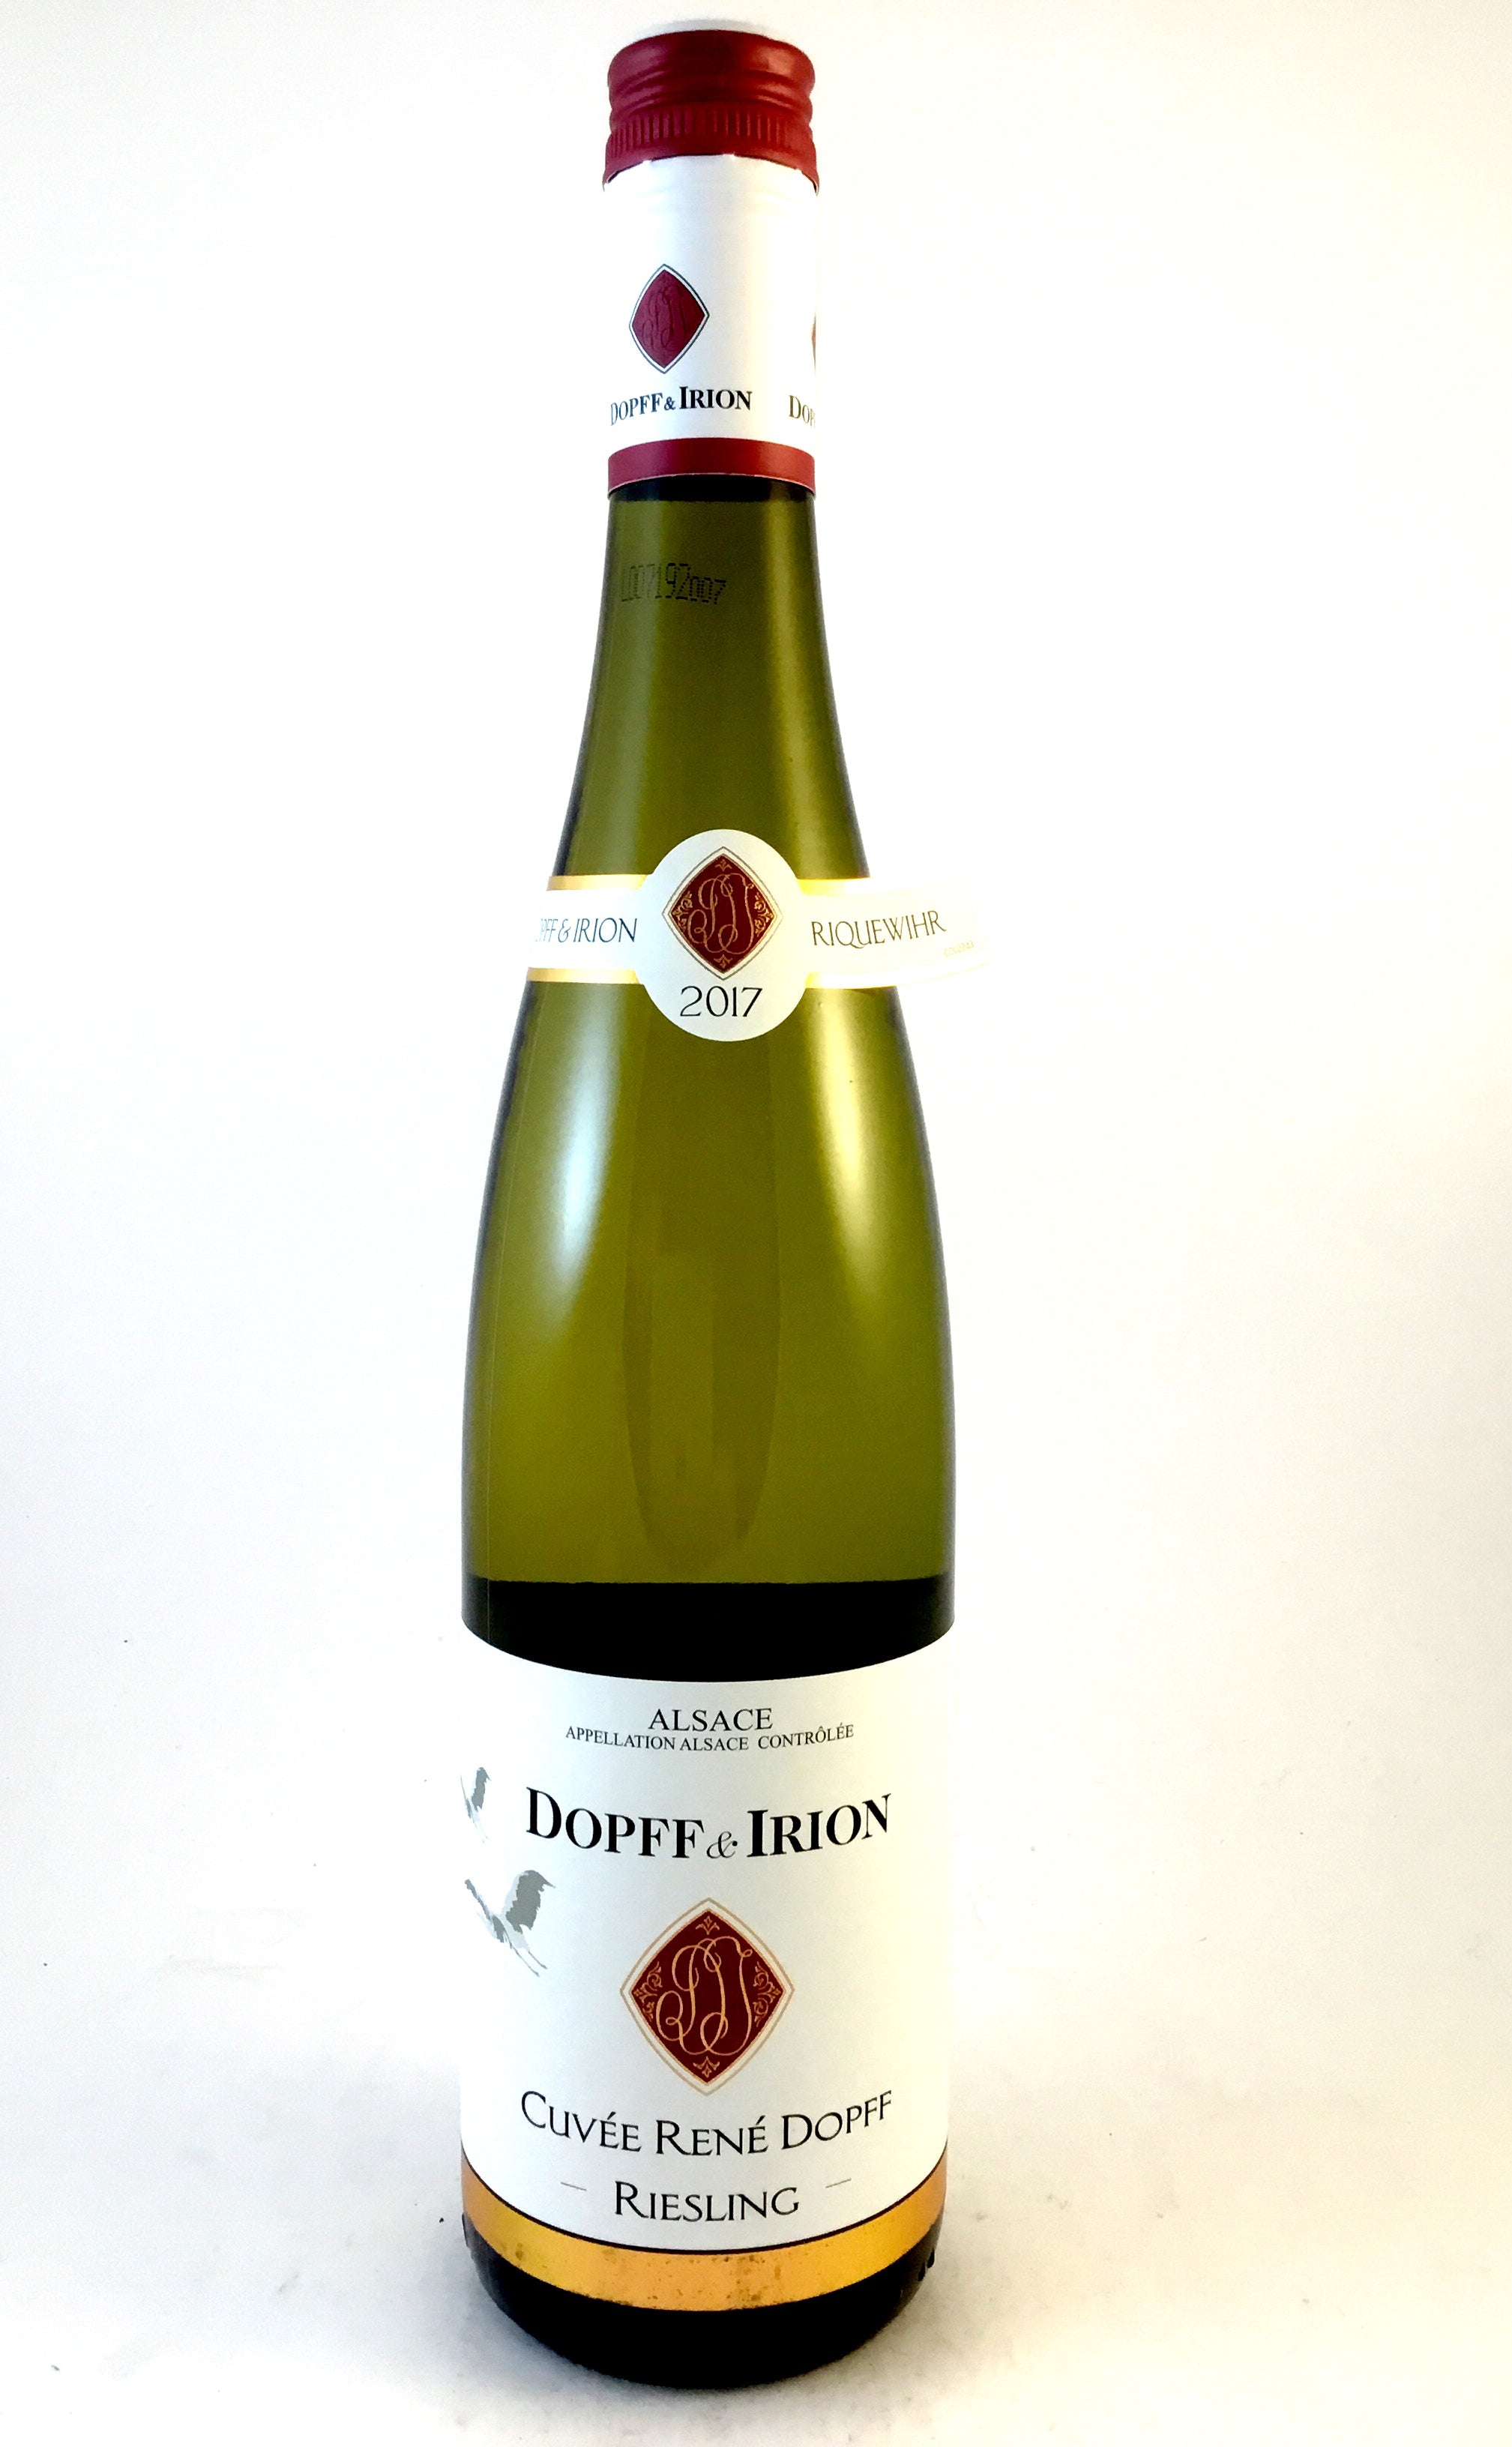 Dopff & Irion Alsace Cuvee Rene Dopff Riesling - Wineseeker